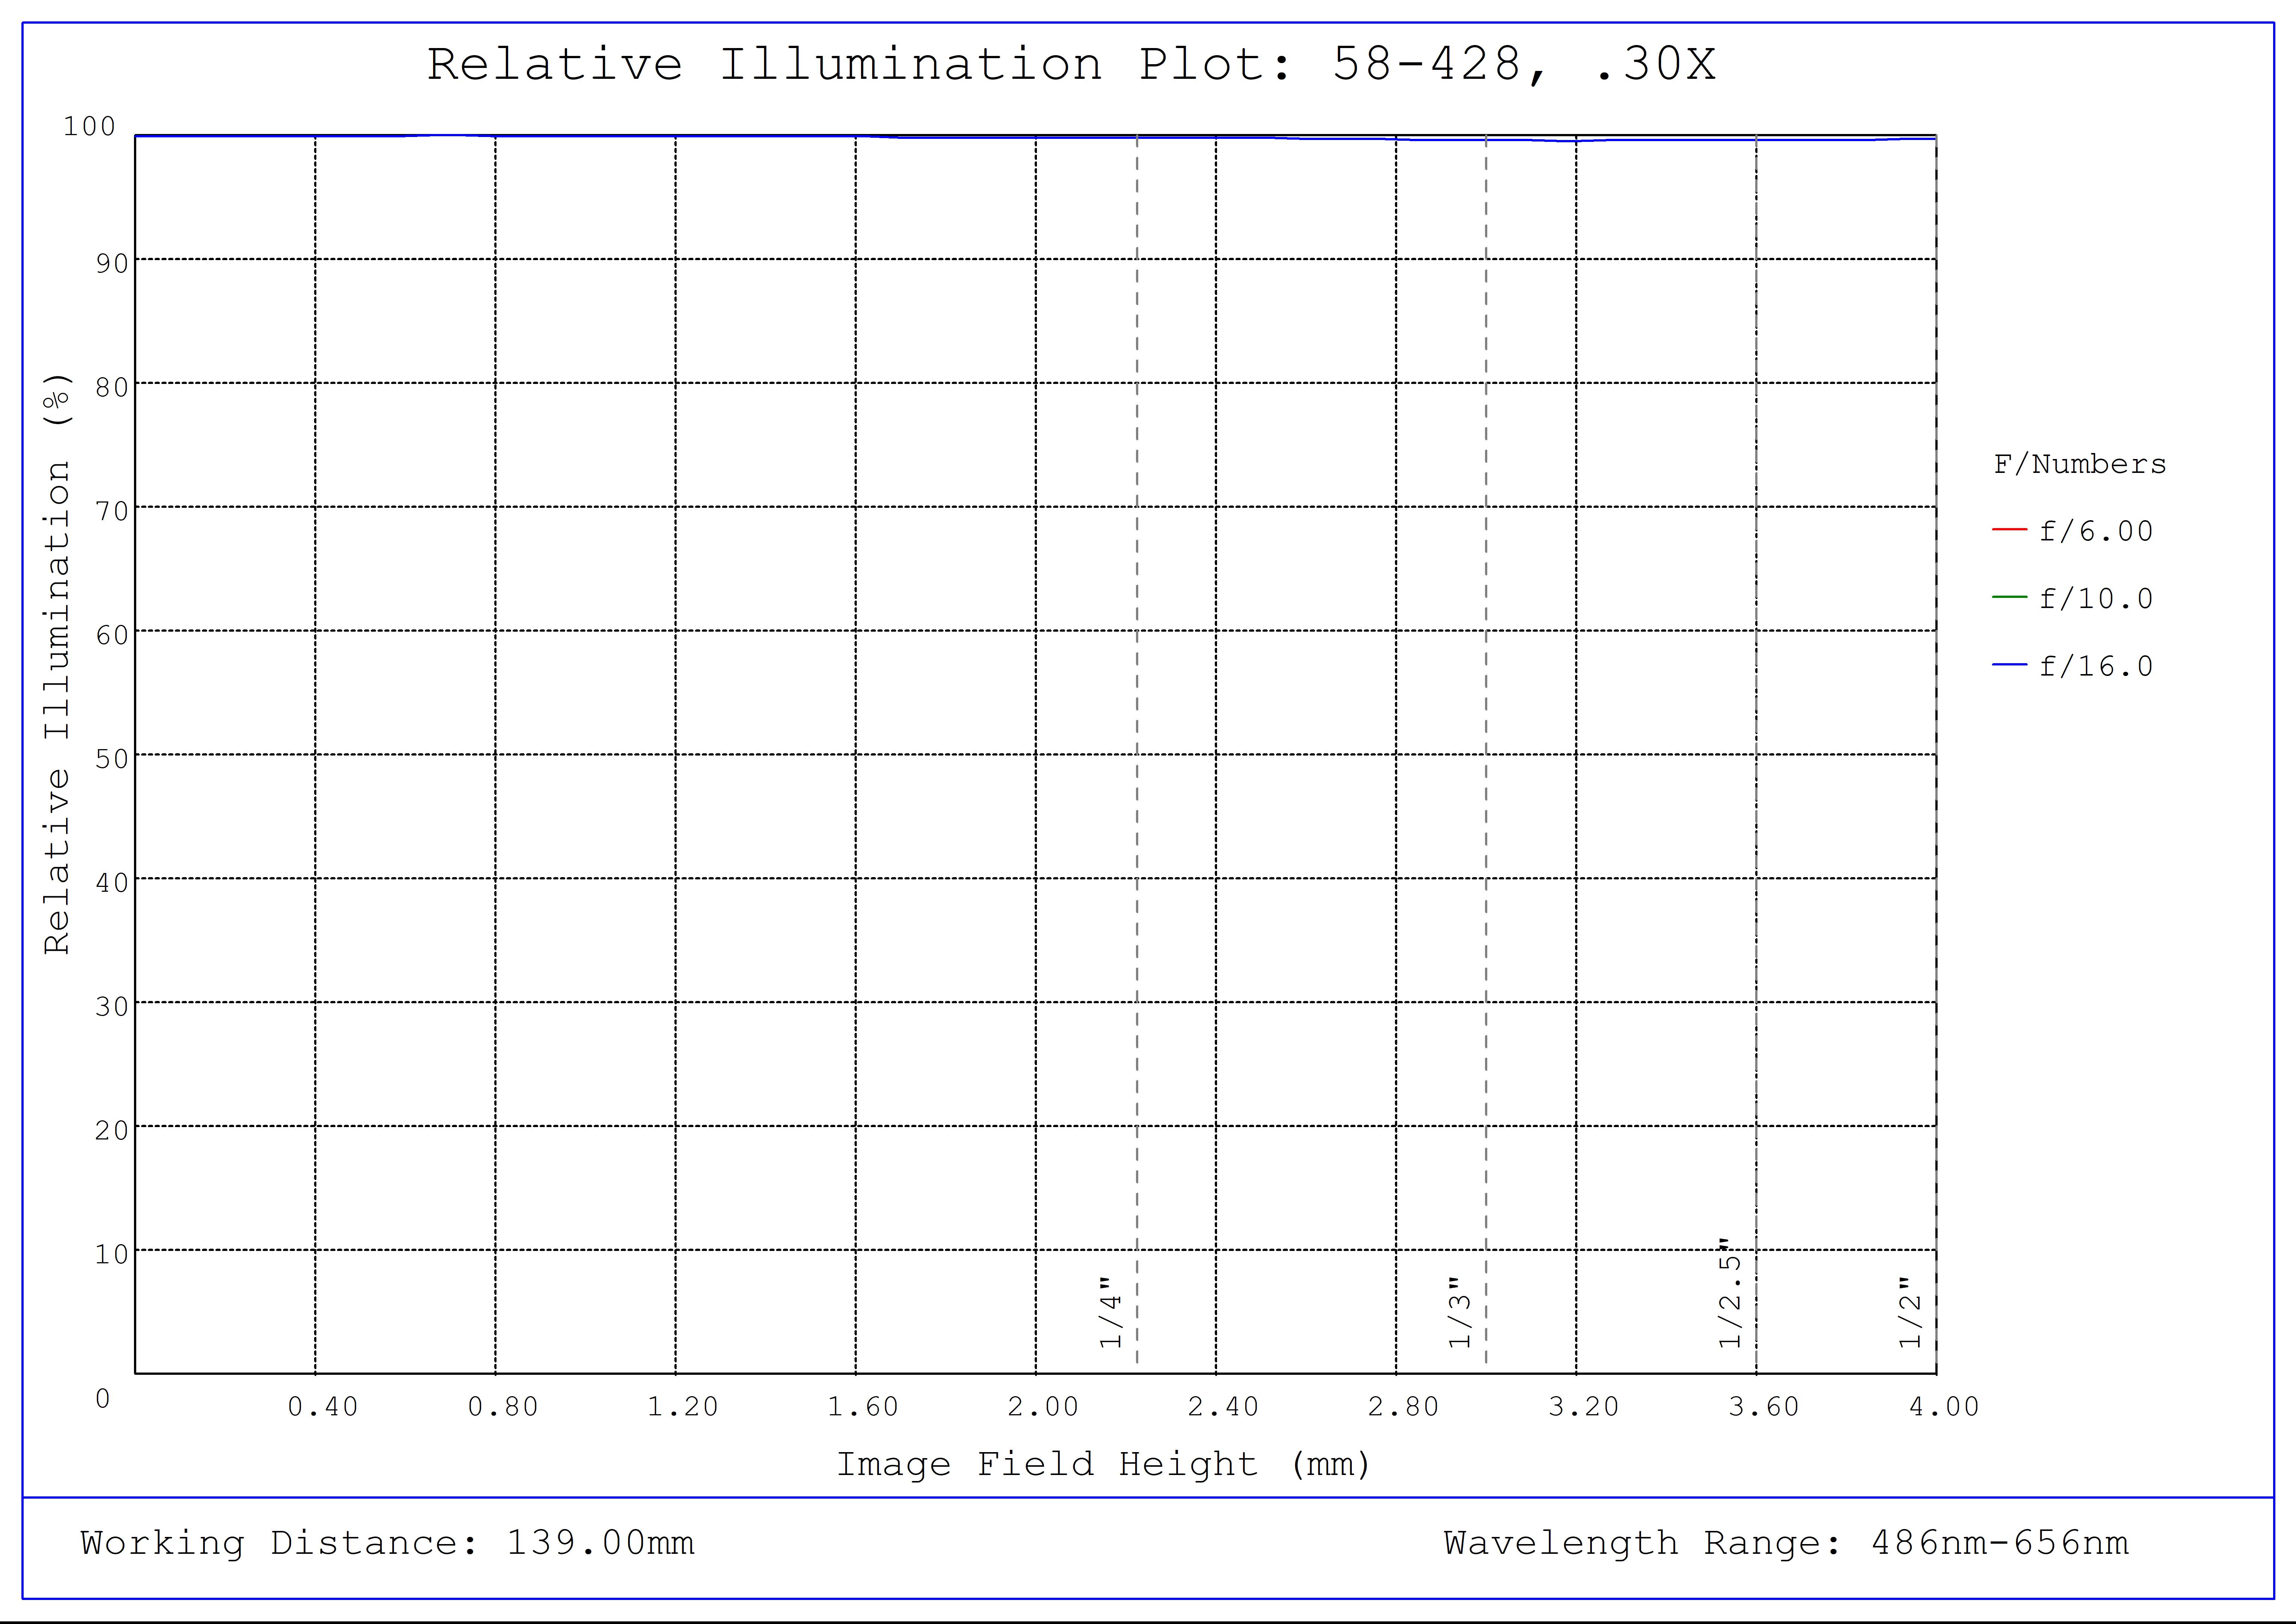 #58-428, 0.30X SilverTL™ Telecentric Lens, Relative Illumination Plot